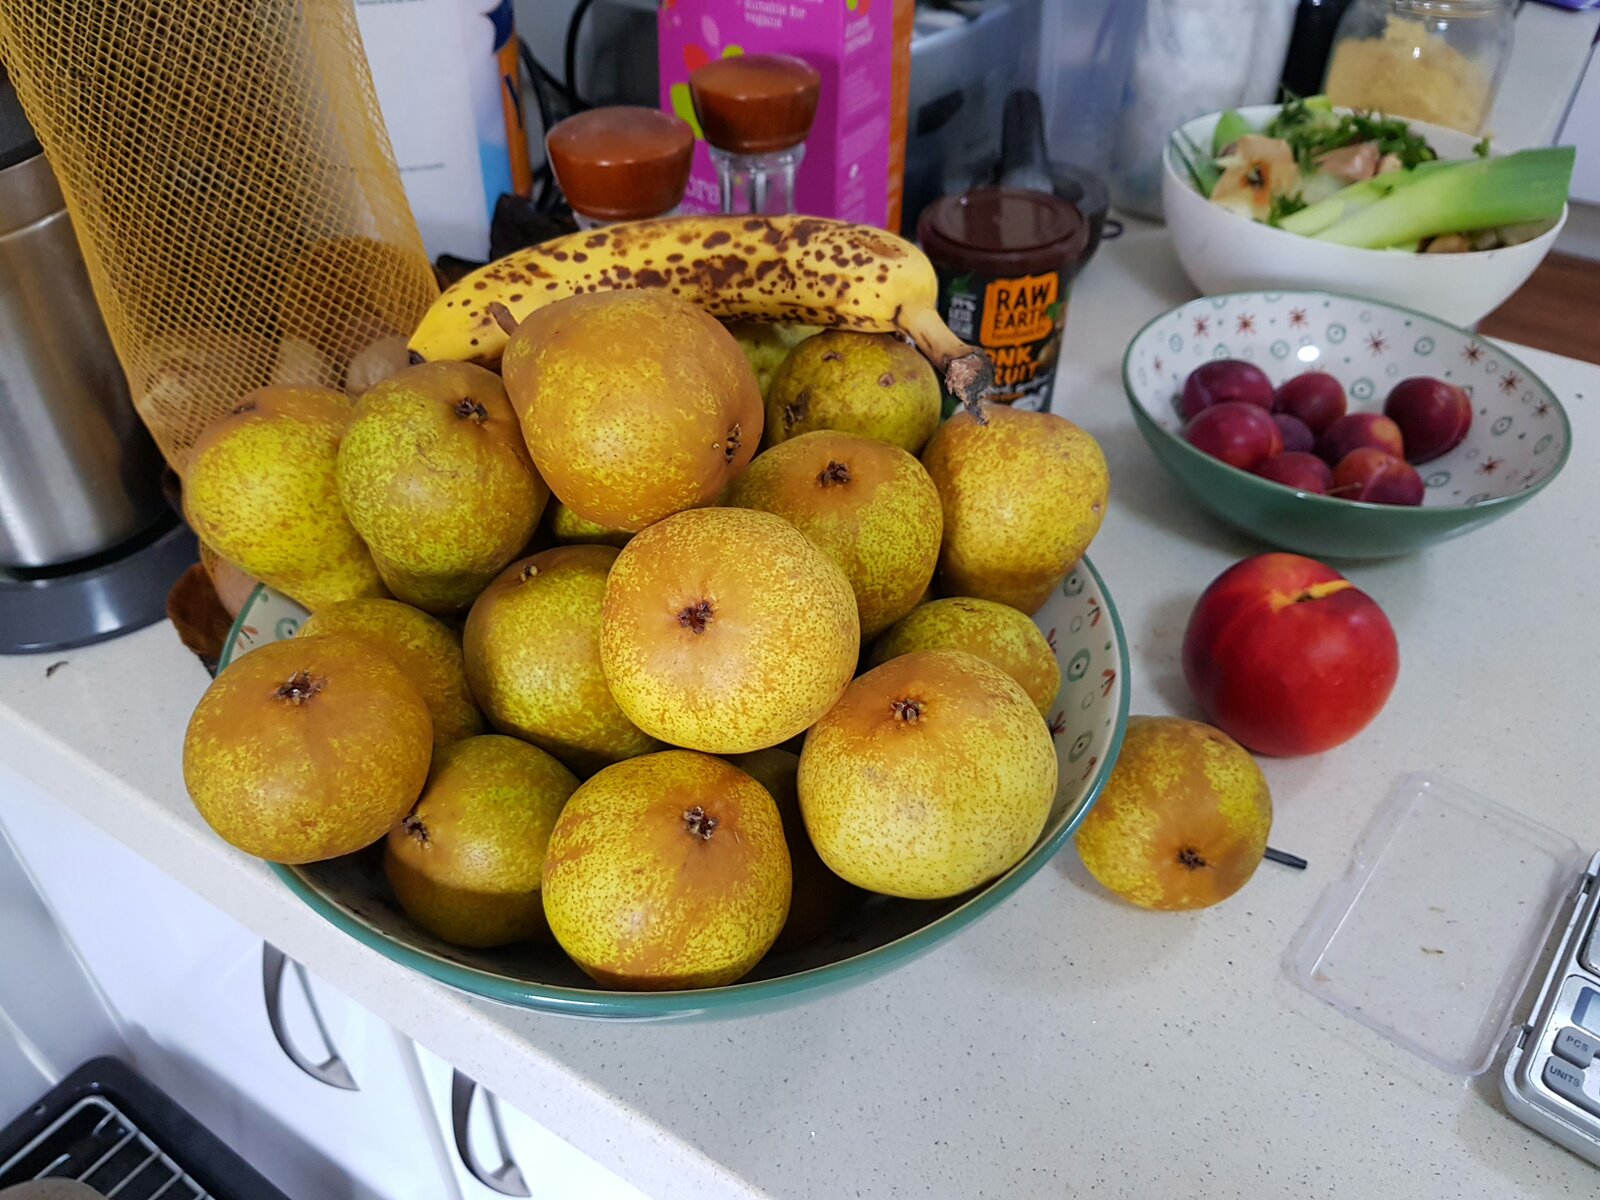 A few ripening pears